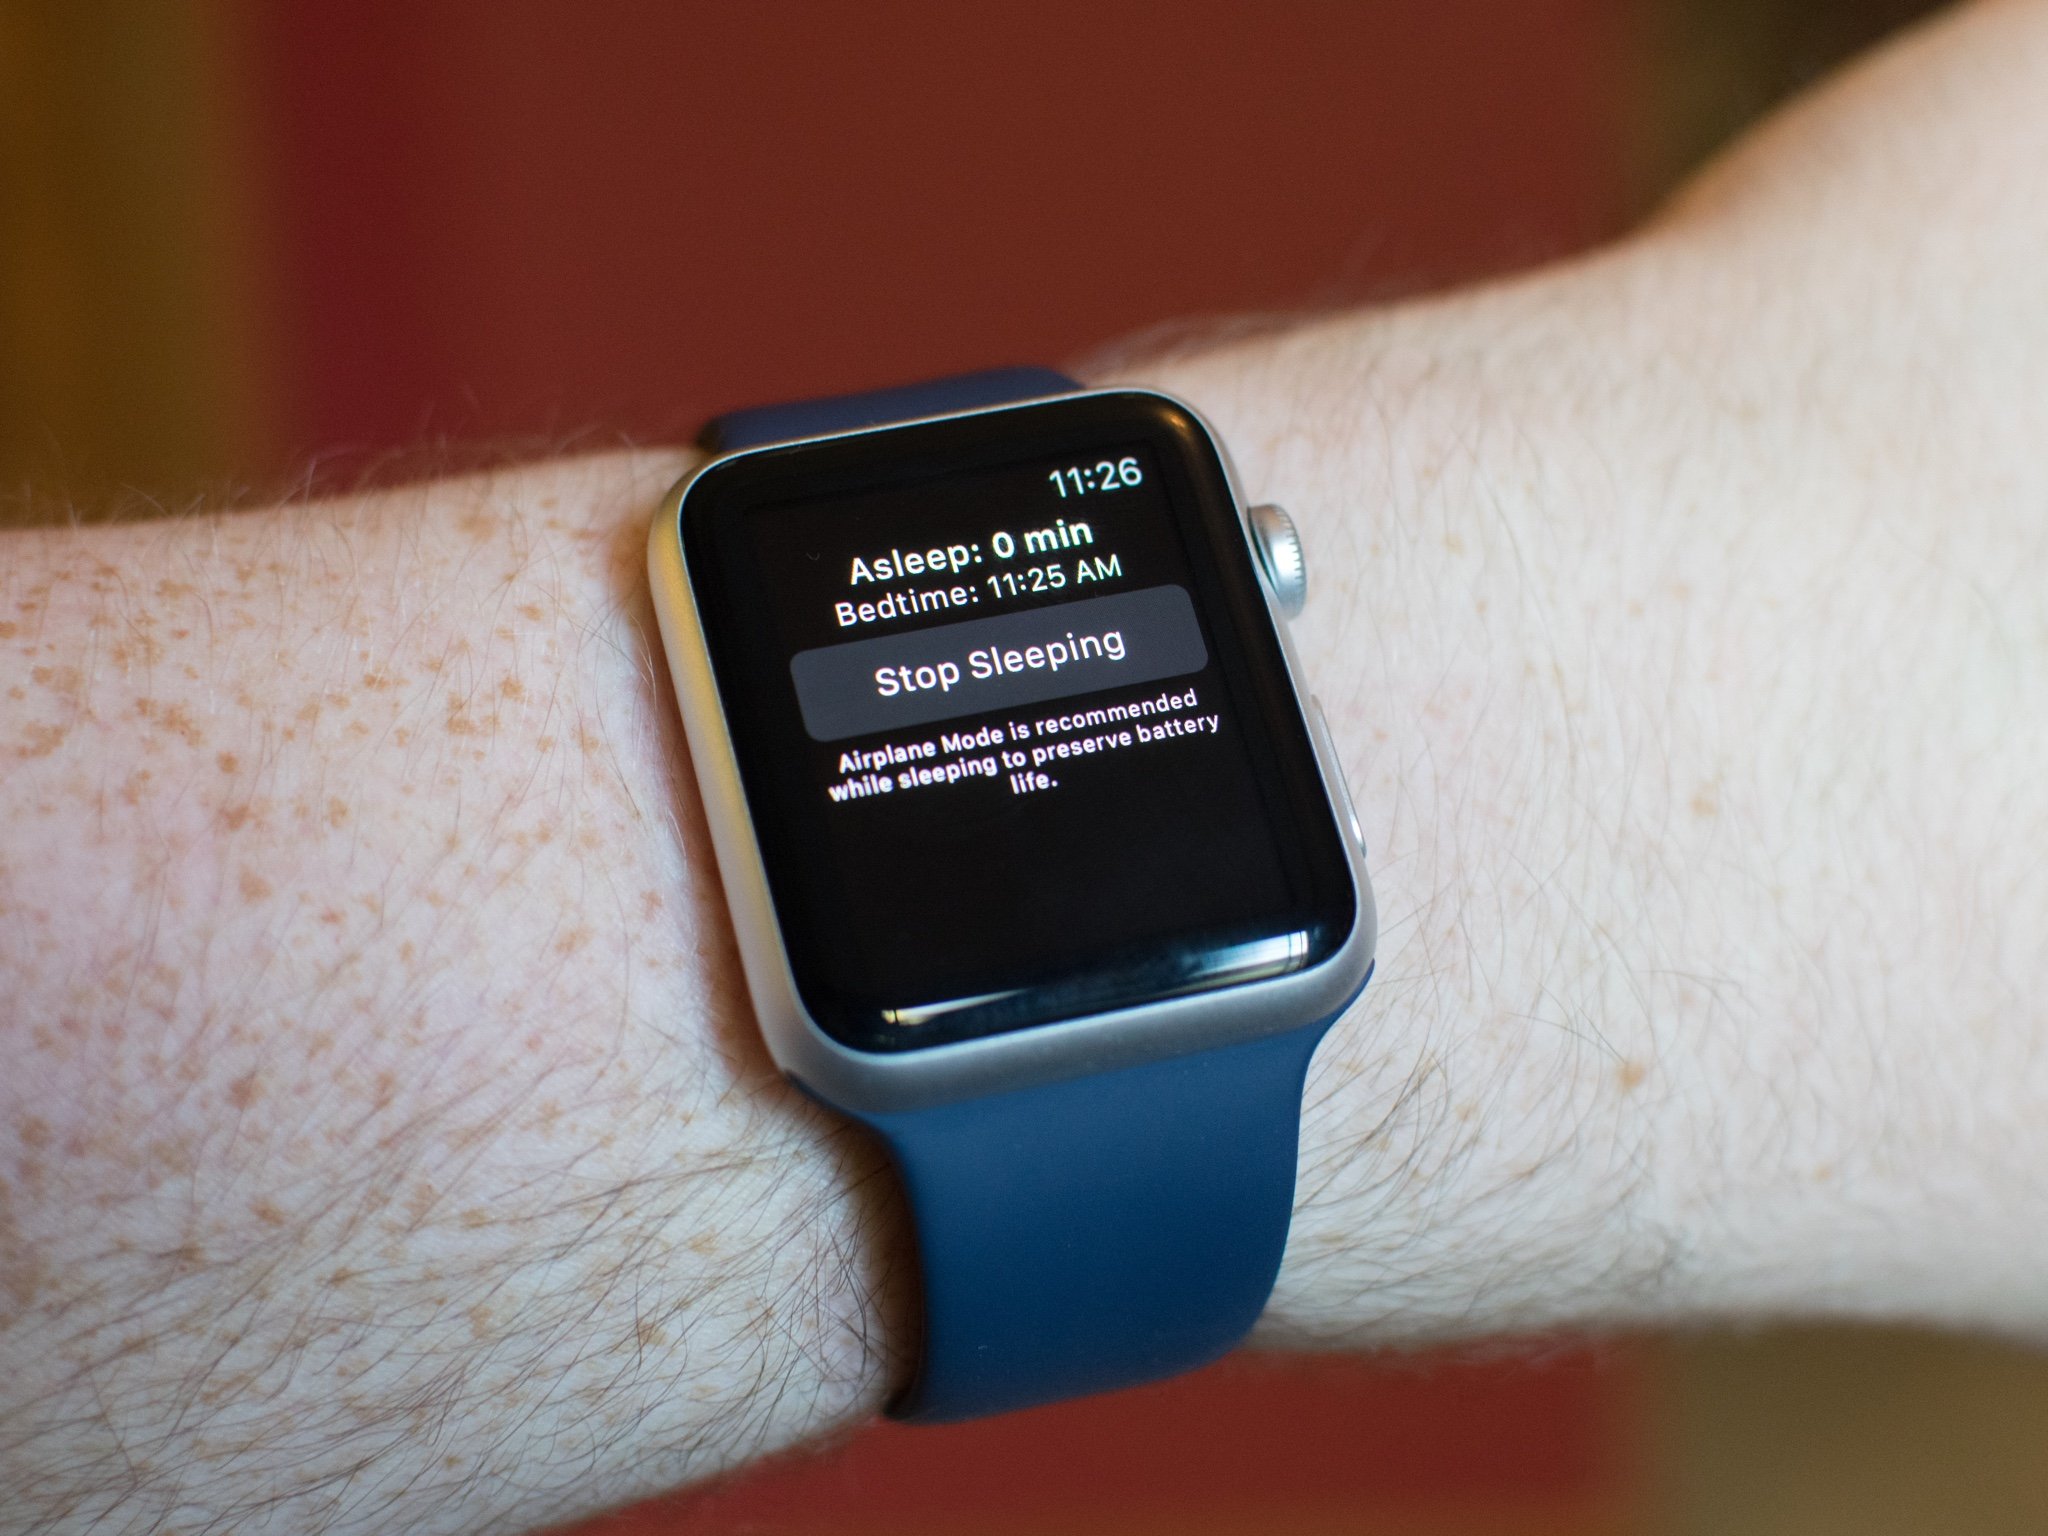 Sleep++ uses your Apple Watch to track your sleep